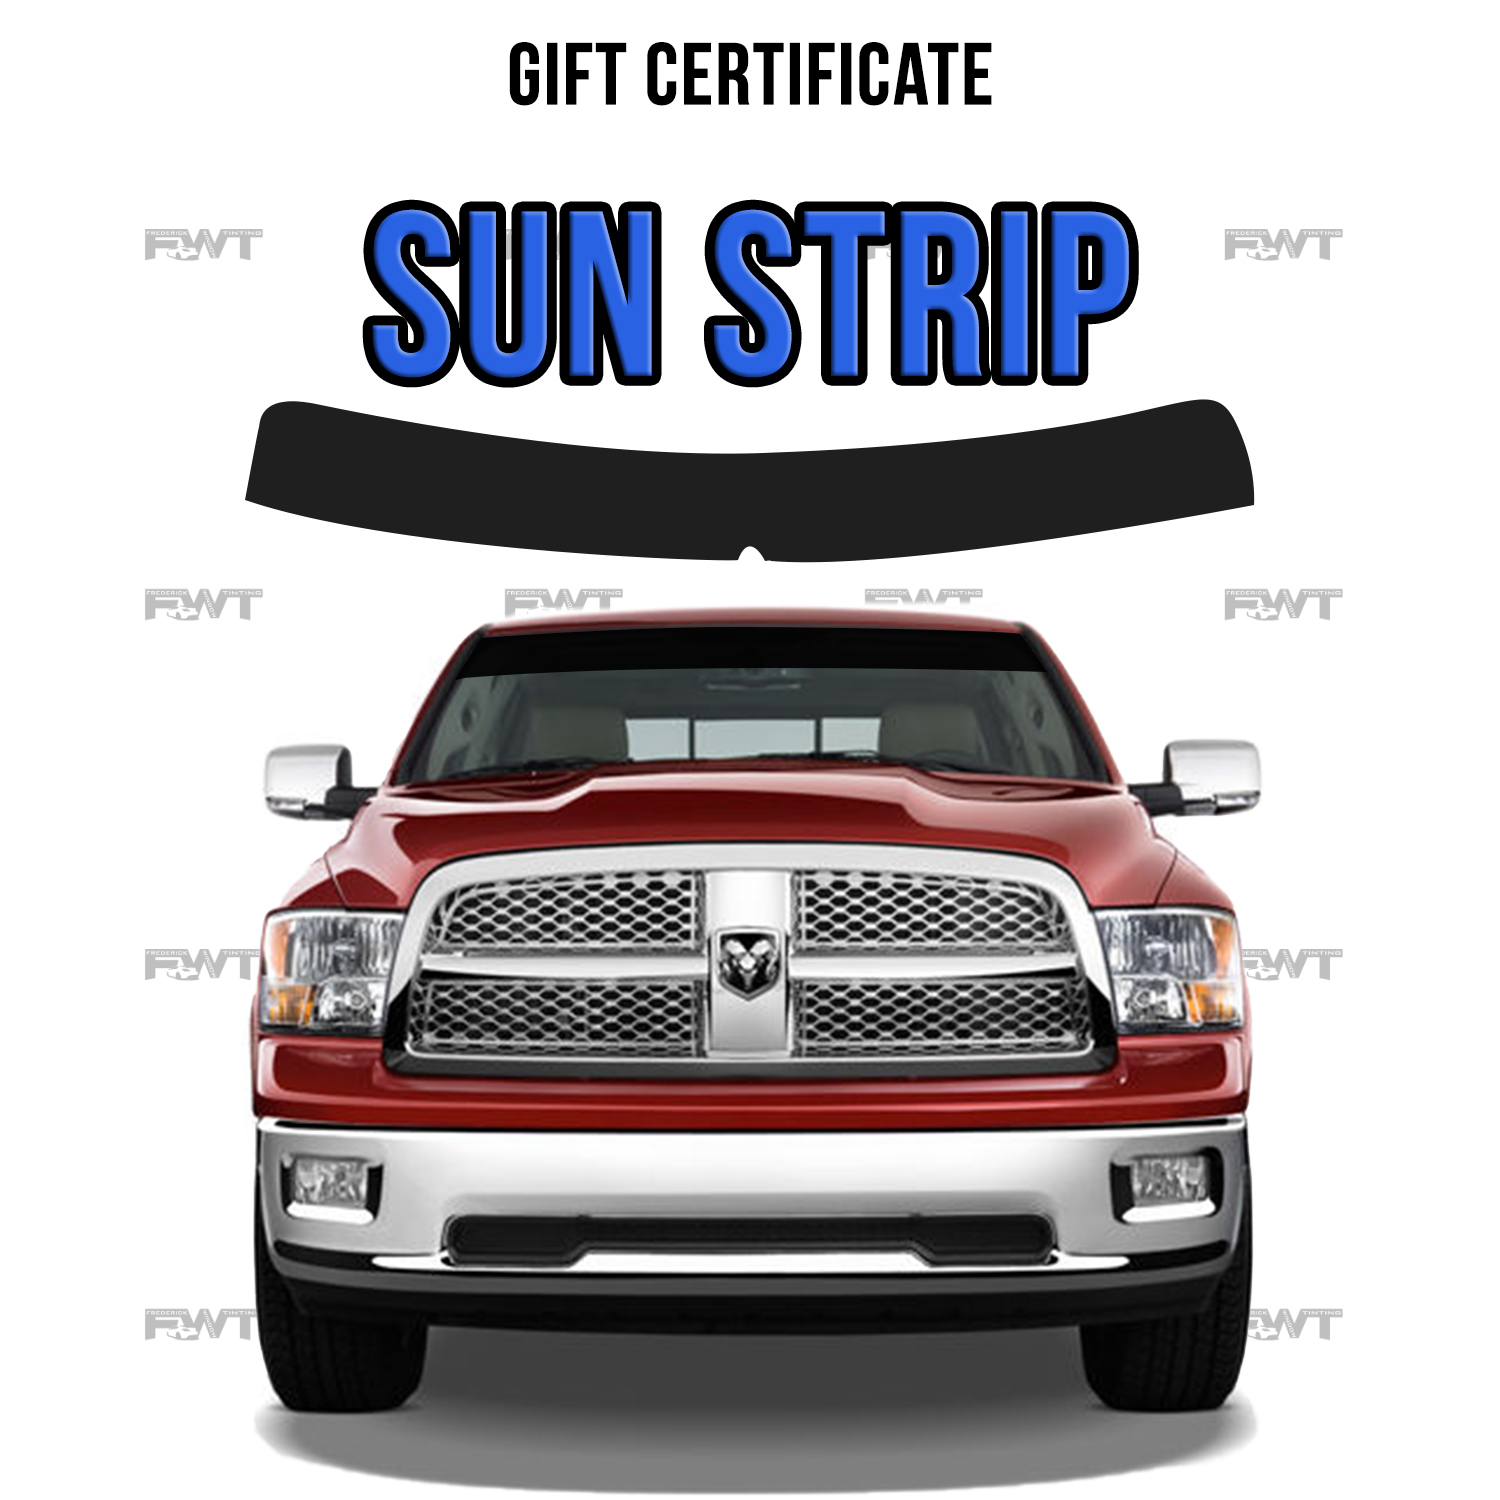 Sun Strip - $60